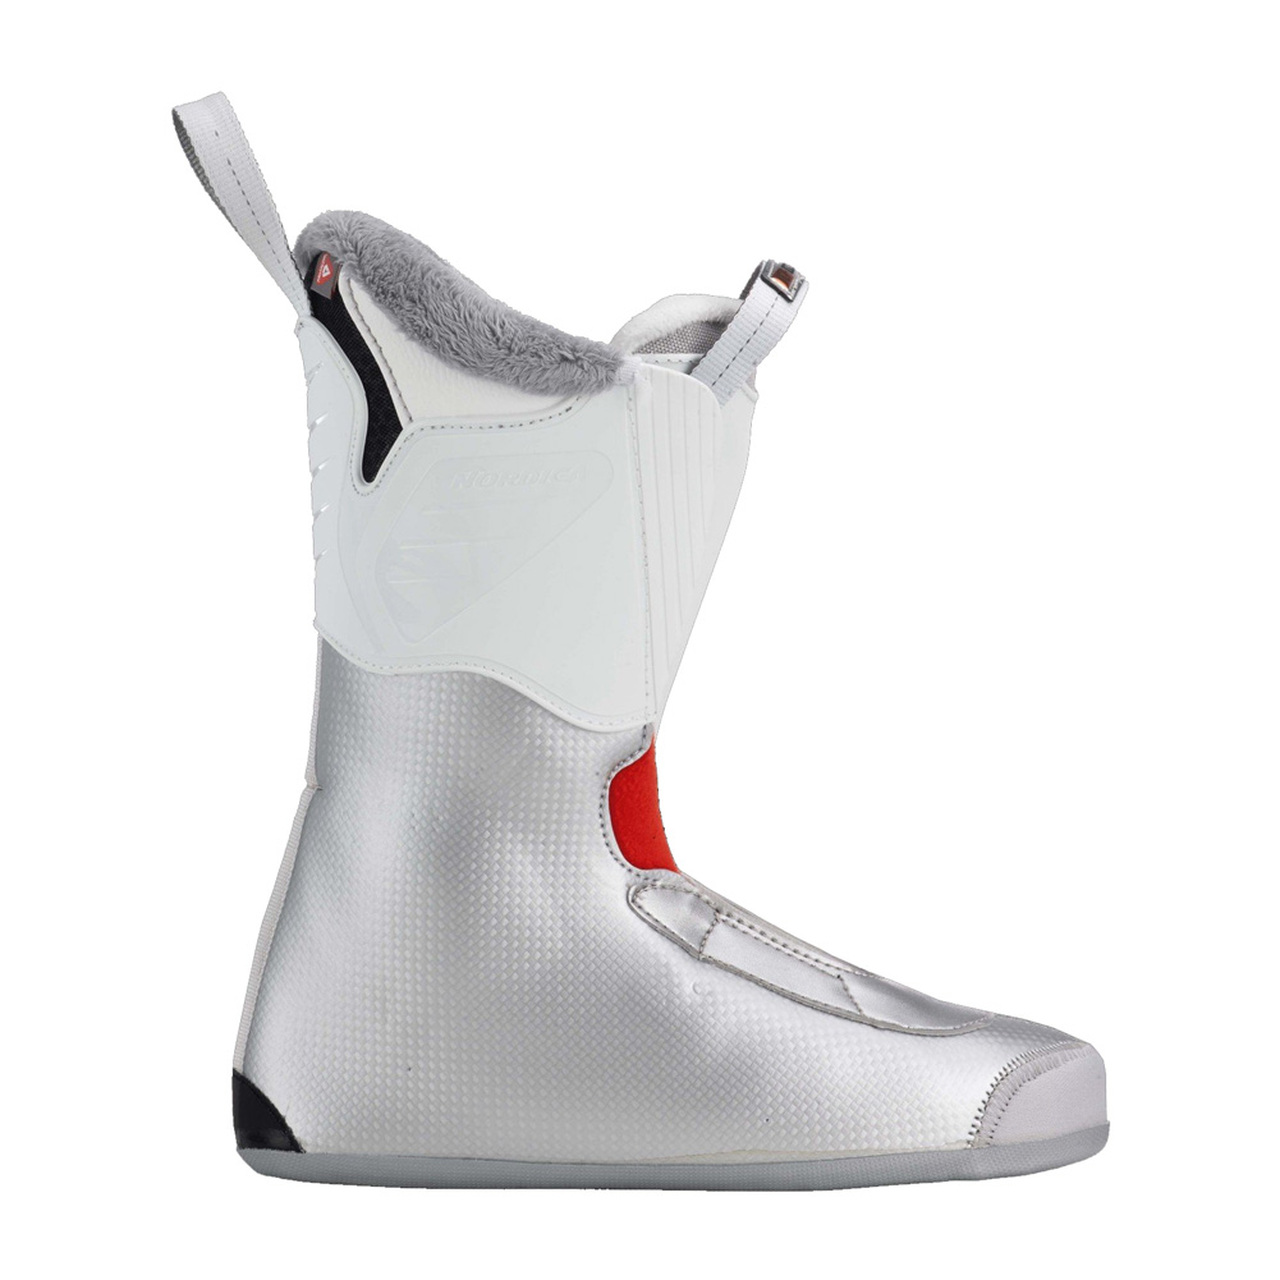 Ski Boots -  nordica SPEEDMACHINE 85 W